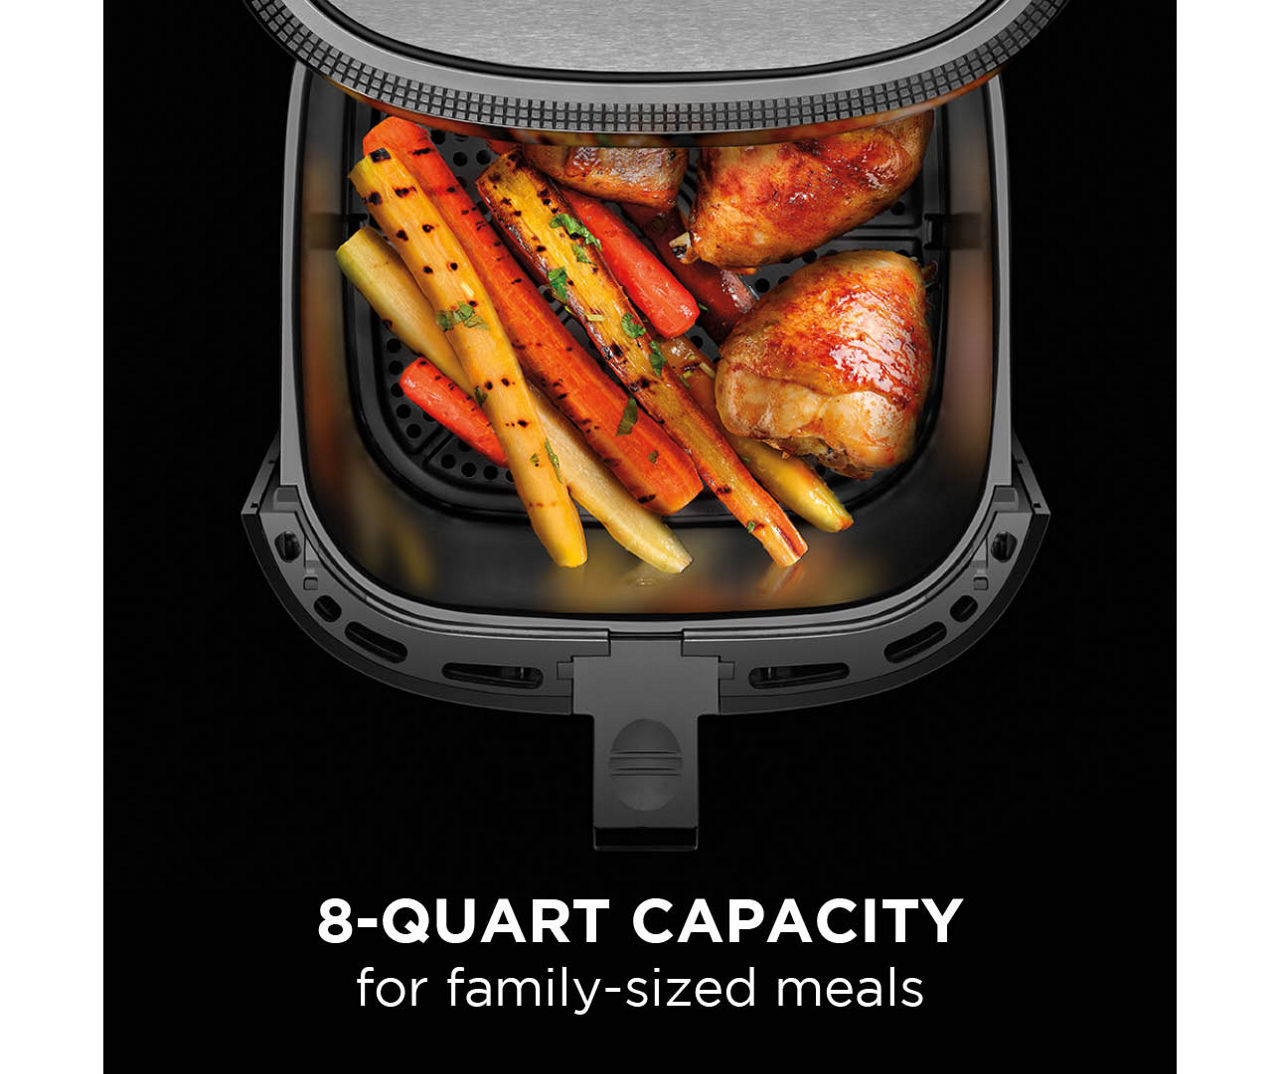 Chefman Flat Basket Air Fryer - Black, 6.8 qt - Jay C Food Stores